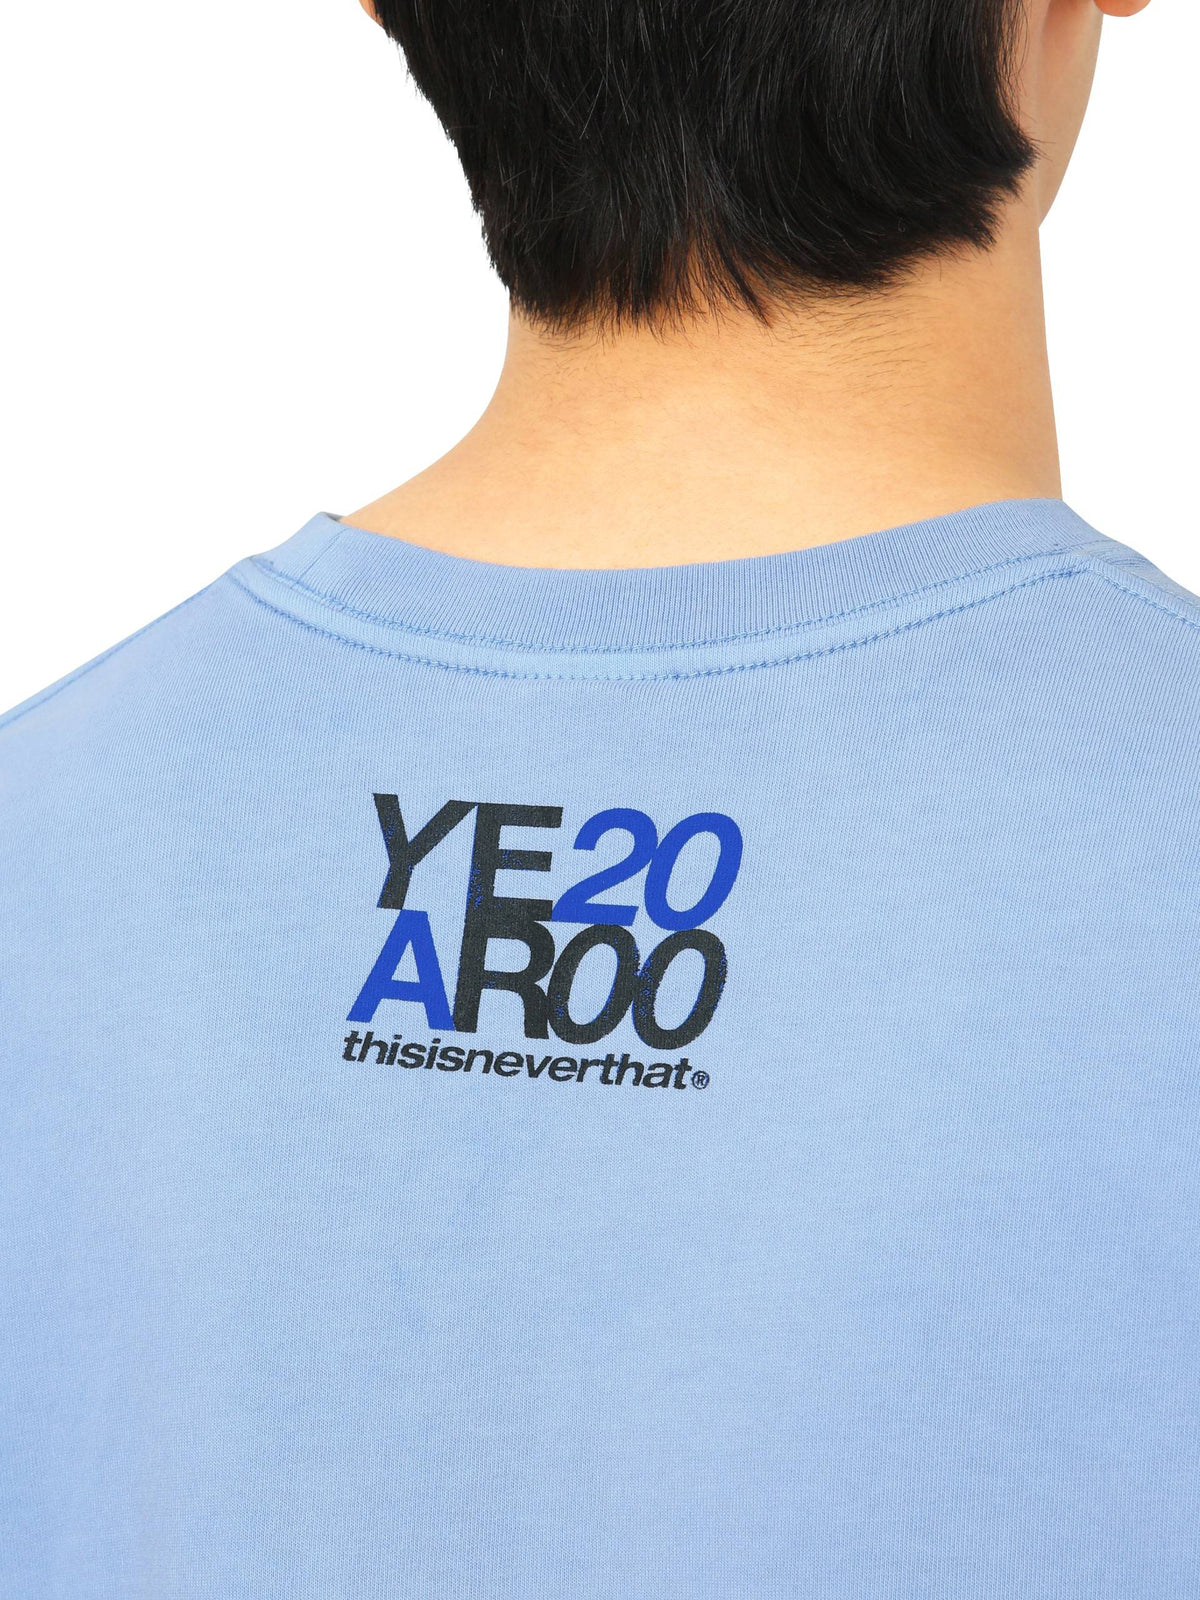 YEAR 2000 Tee T-Shirt 